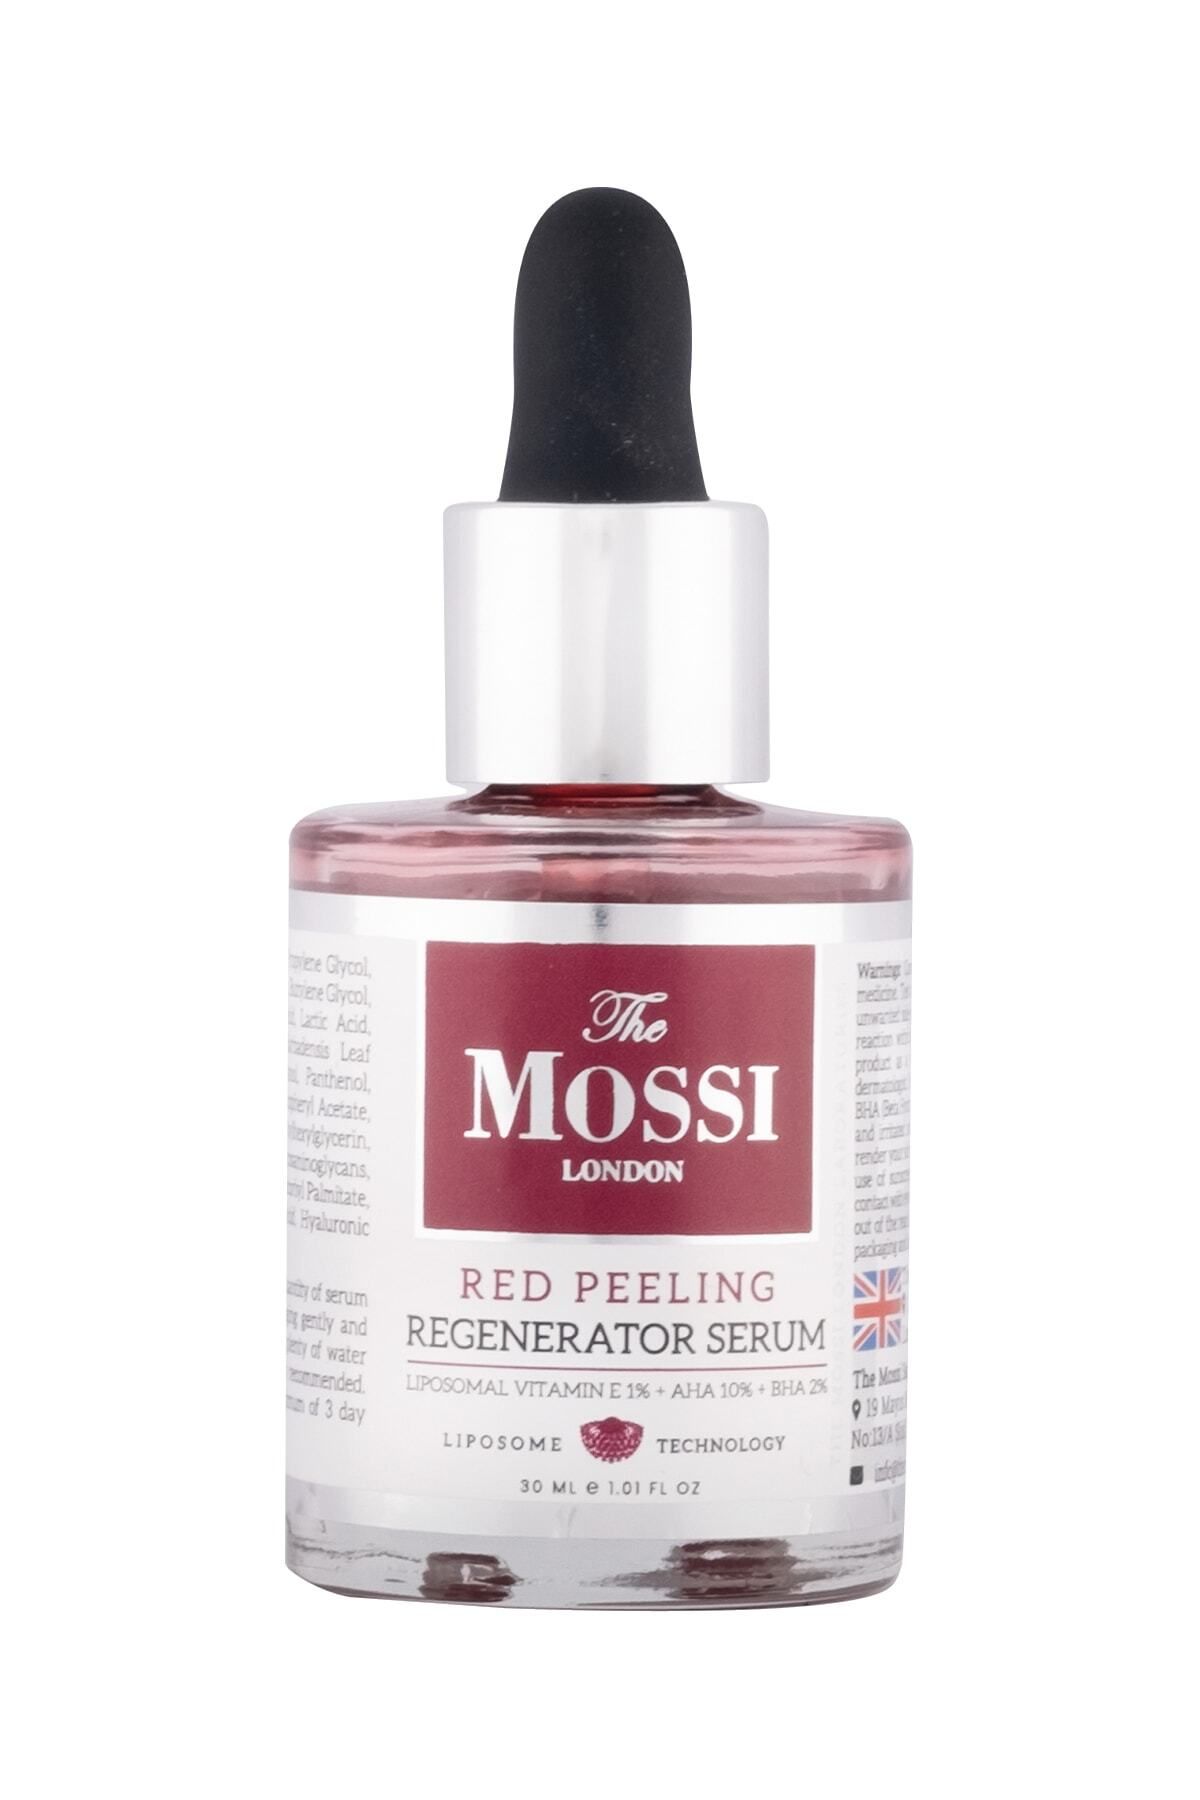 The Mossi London Red Peeling Regenerator Serum Liposomal Vitamin E 1% + Aha 10% + Bha 2% 30 Ml - Tml1013